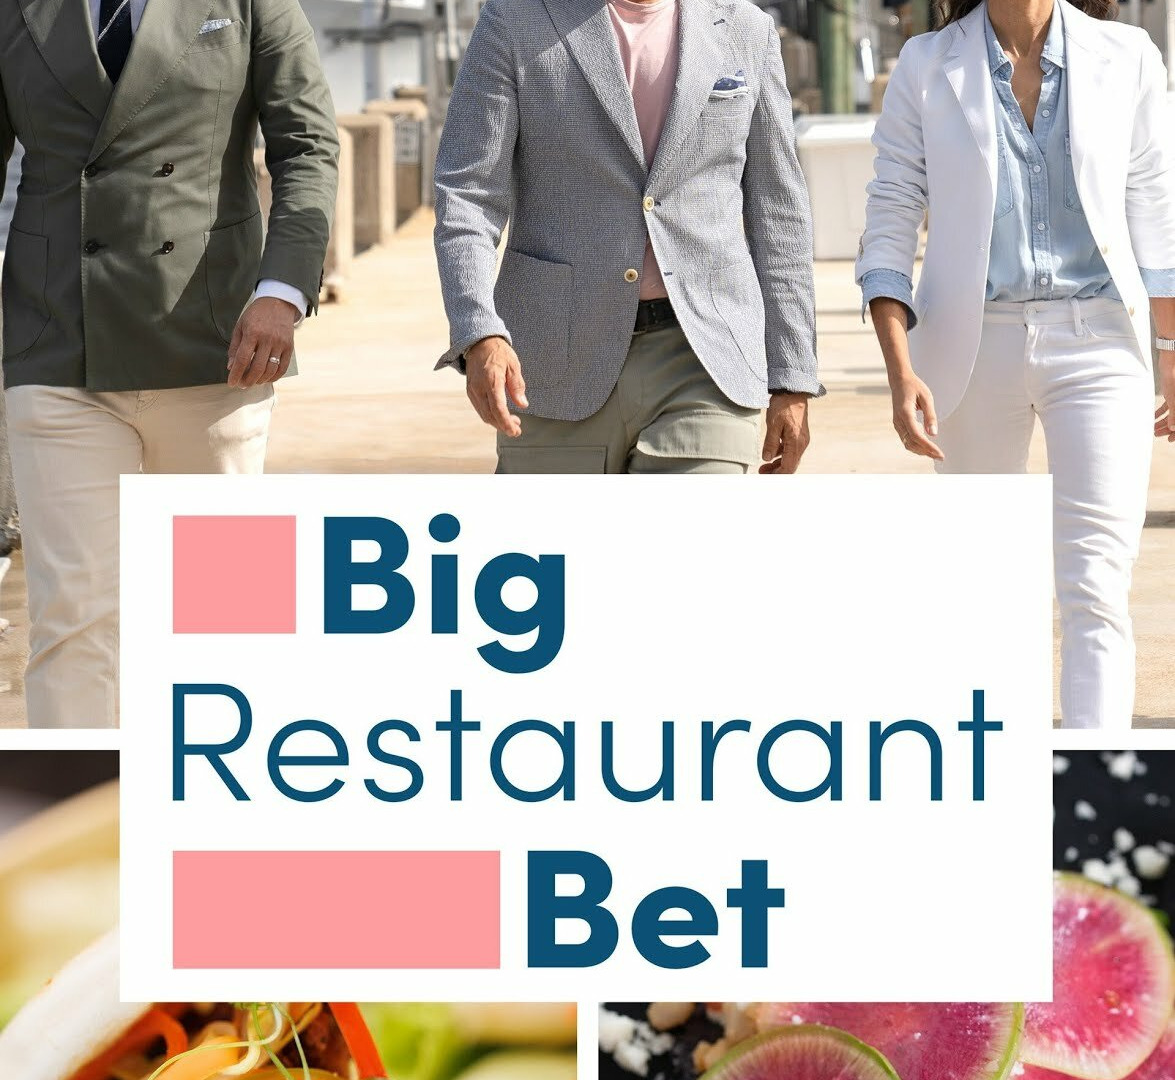 Show Big Restaurant Bet